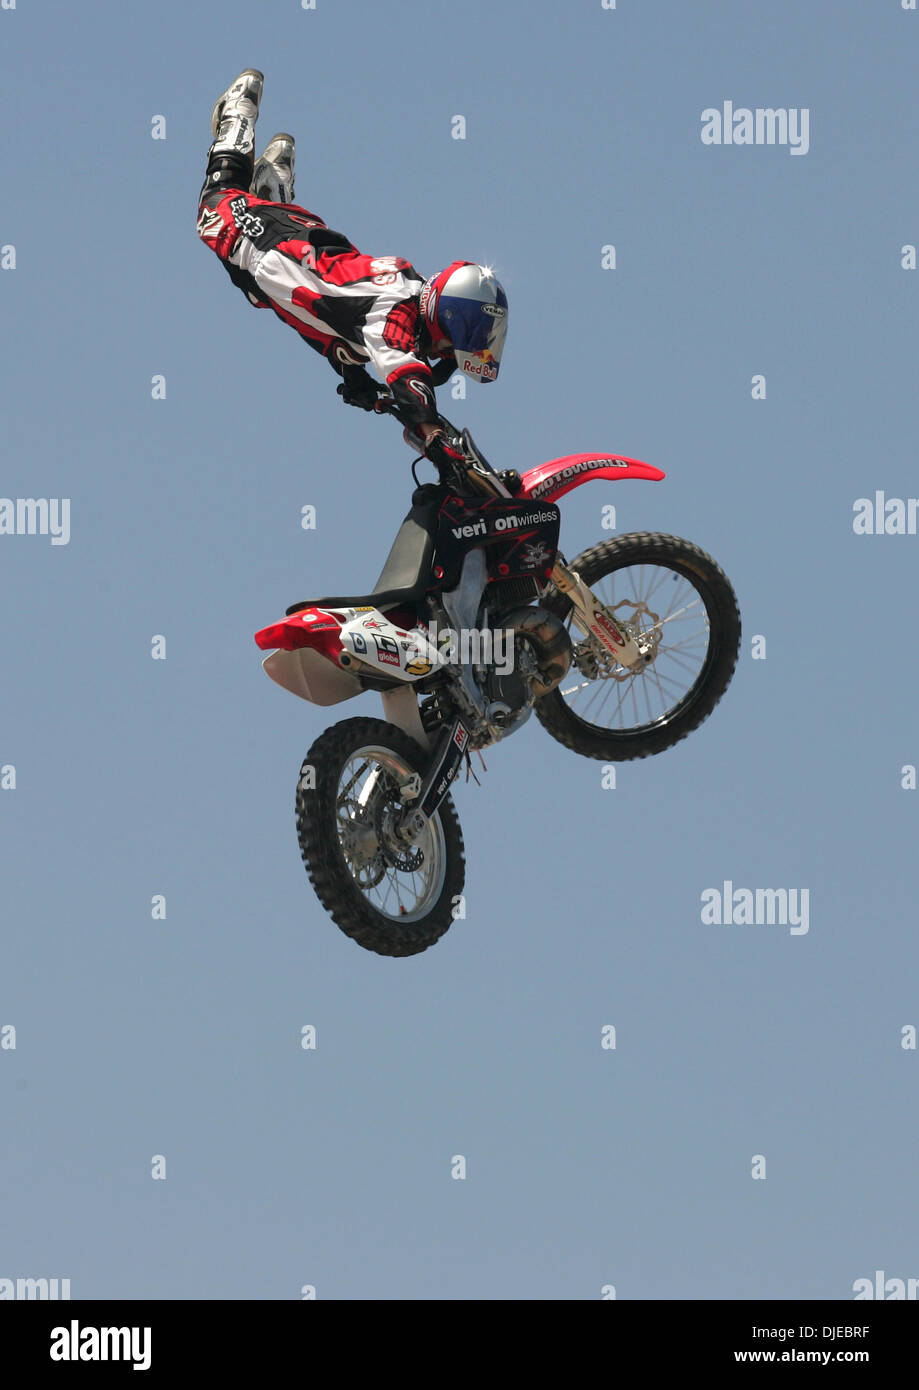 Aug 01, 2004 ; Huntington Beach, CA, USA ; MOTO X stunt Rider KLOWERS TOMMY  sur son dirt jumping HONDA Enduro motocross moto. Les sports extrêmes sont  attirer plus de foule avec